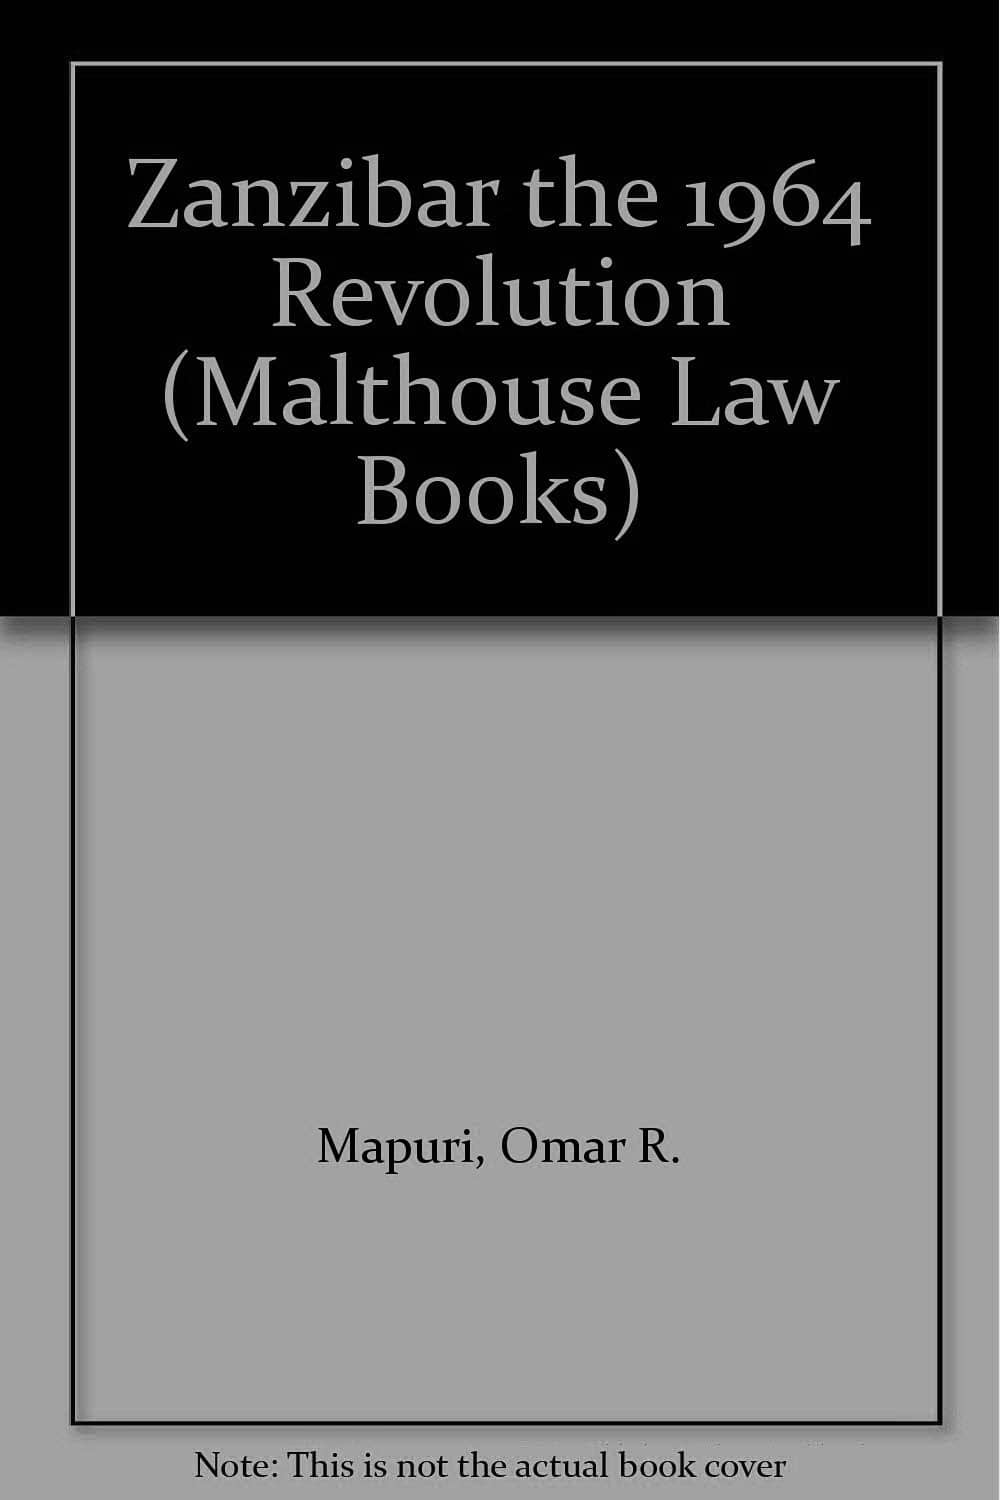 A controversial book, Zanzibar - The 1964 Revolution by Omar Mapuri